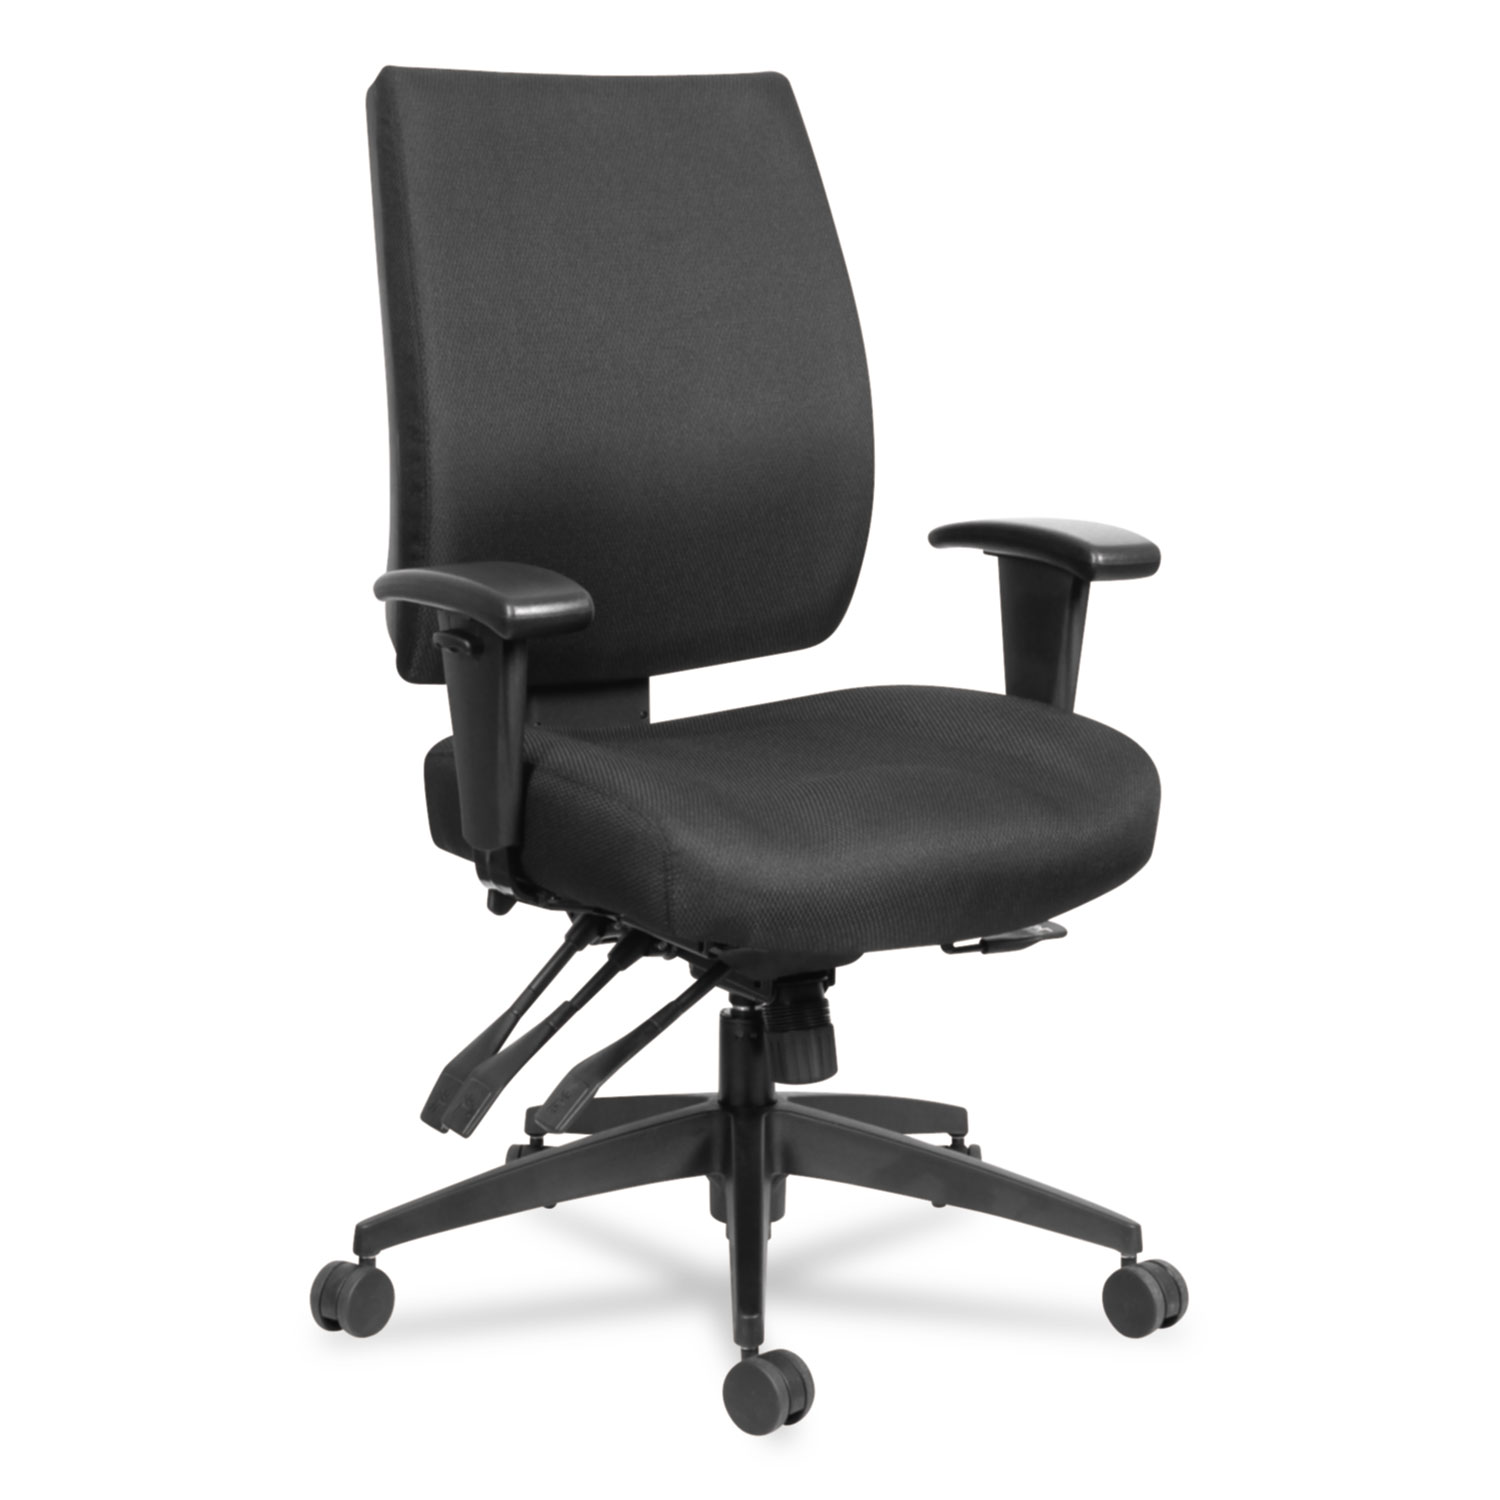  Alera ALEHPT4201 Alera Wrigley Series 24/7 High Performance Mid-Back Multifunction Task Chair, Up to 300 lbs., Black Seat/Back, Black Base (ALEHPT4201) 